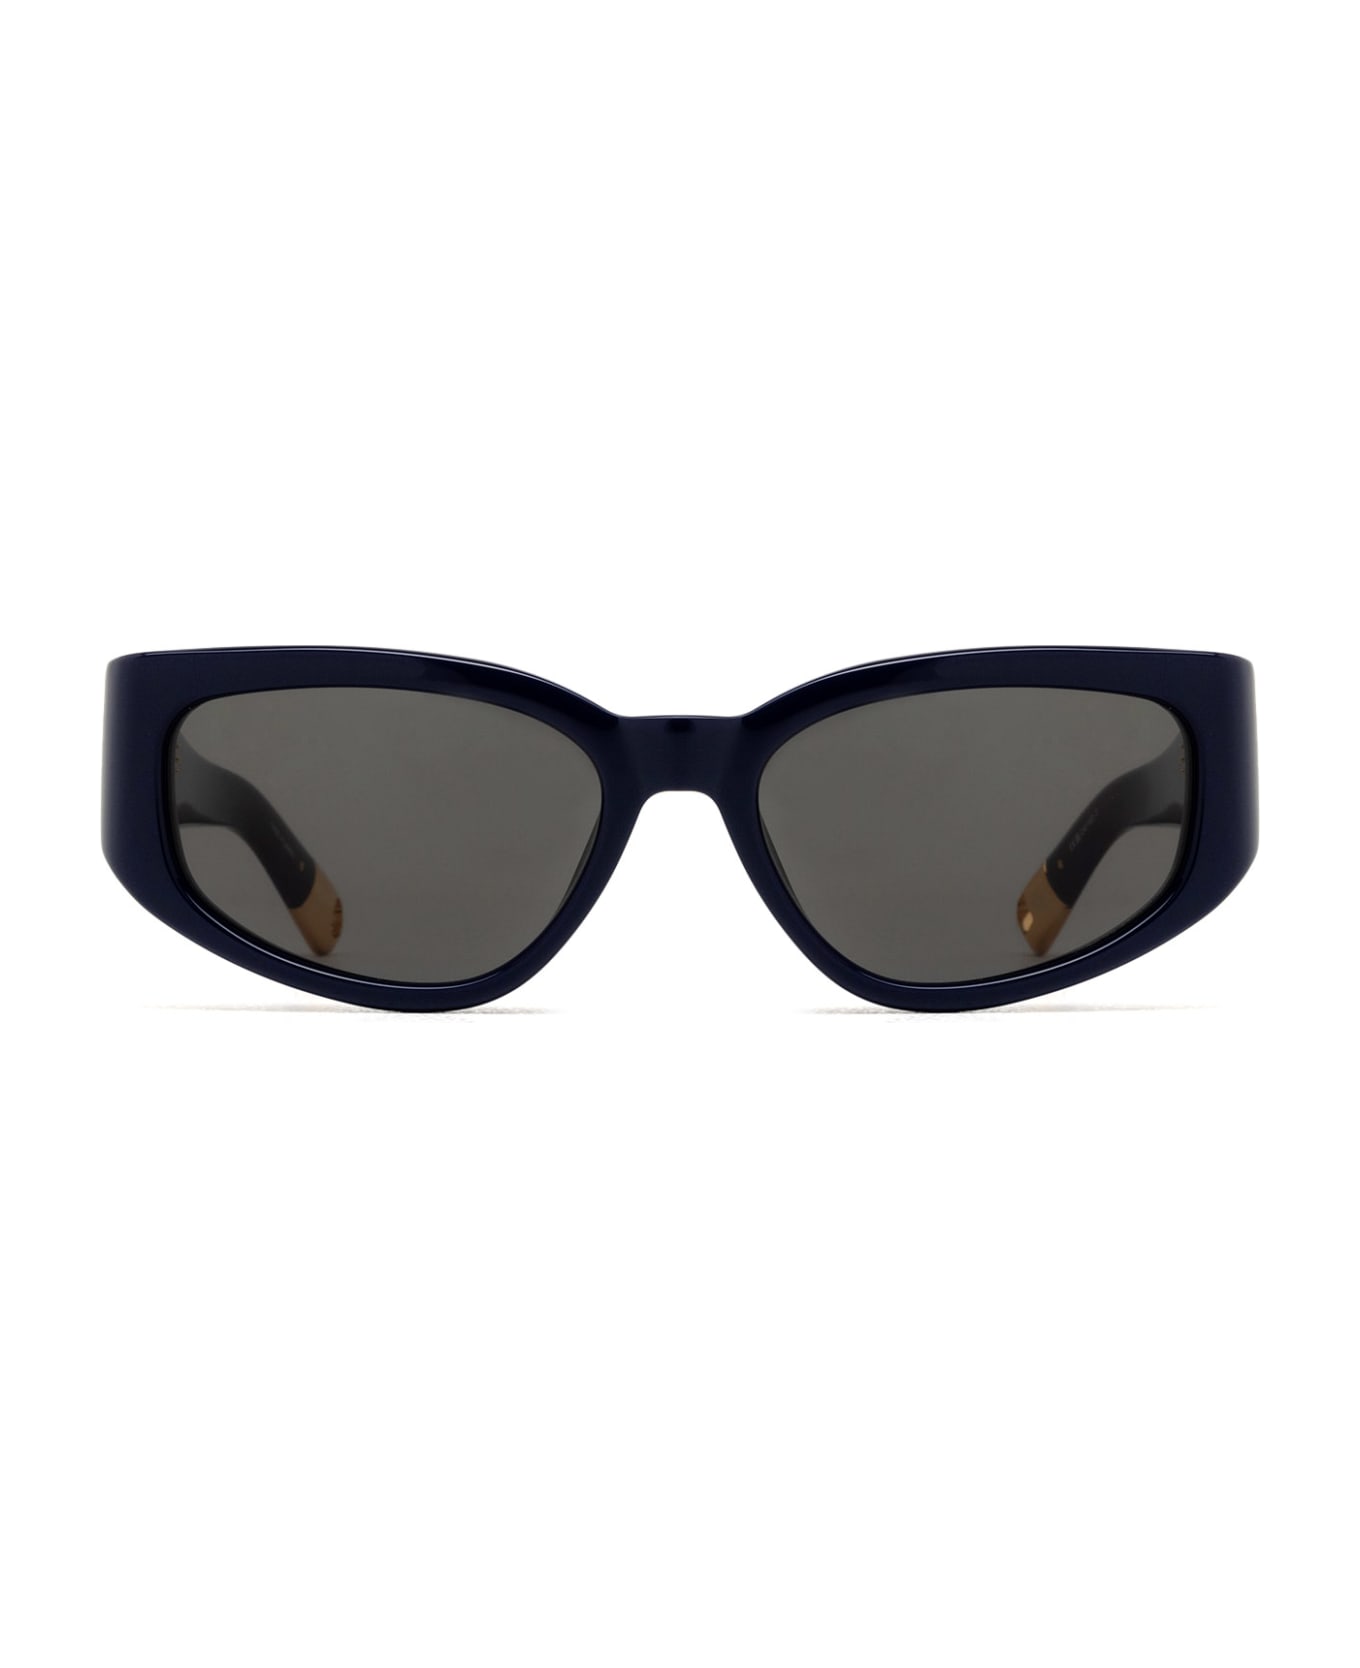 Jacquemus Jac5 Navy Sunglasses - Navy サングラス